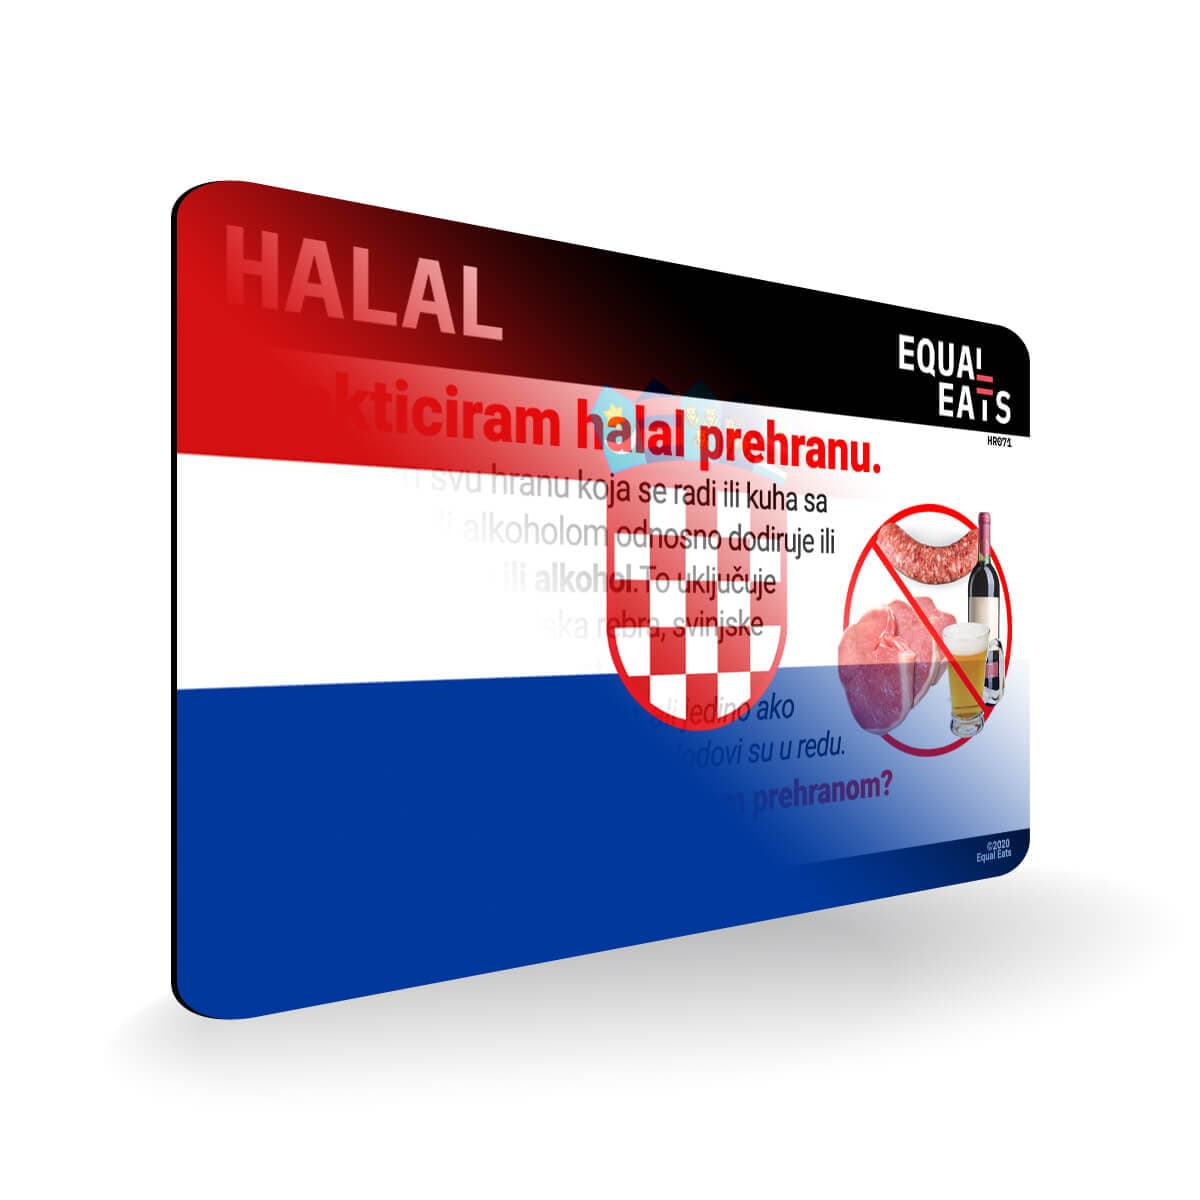 Halal Diet in Croatian. Halal Food Card for Croatia